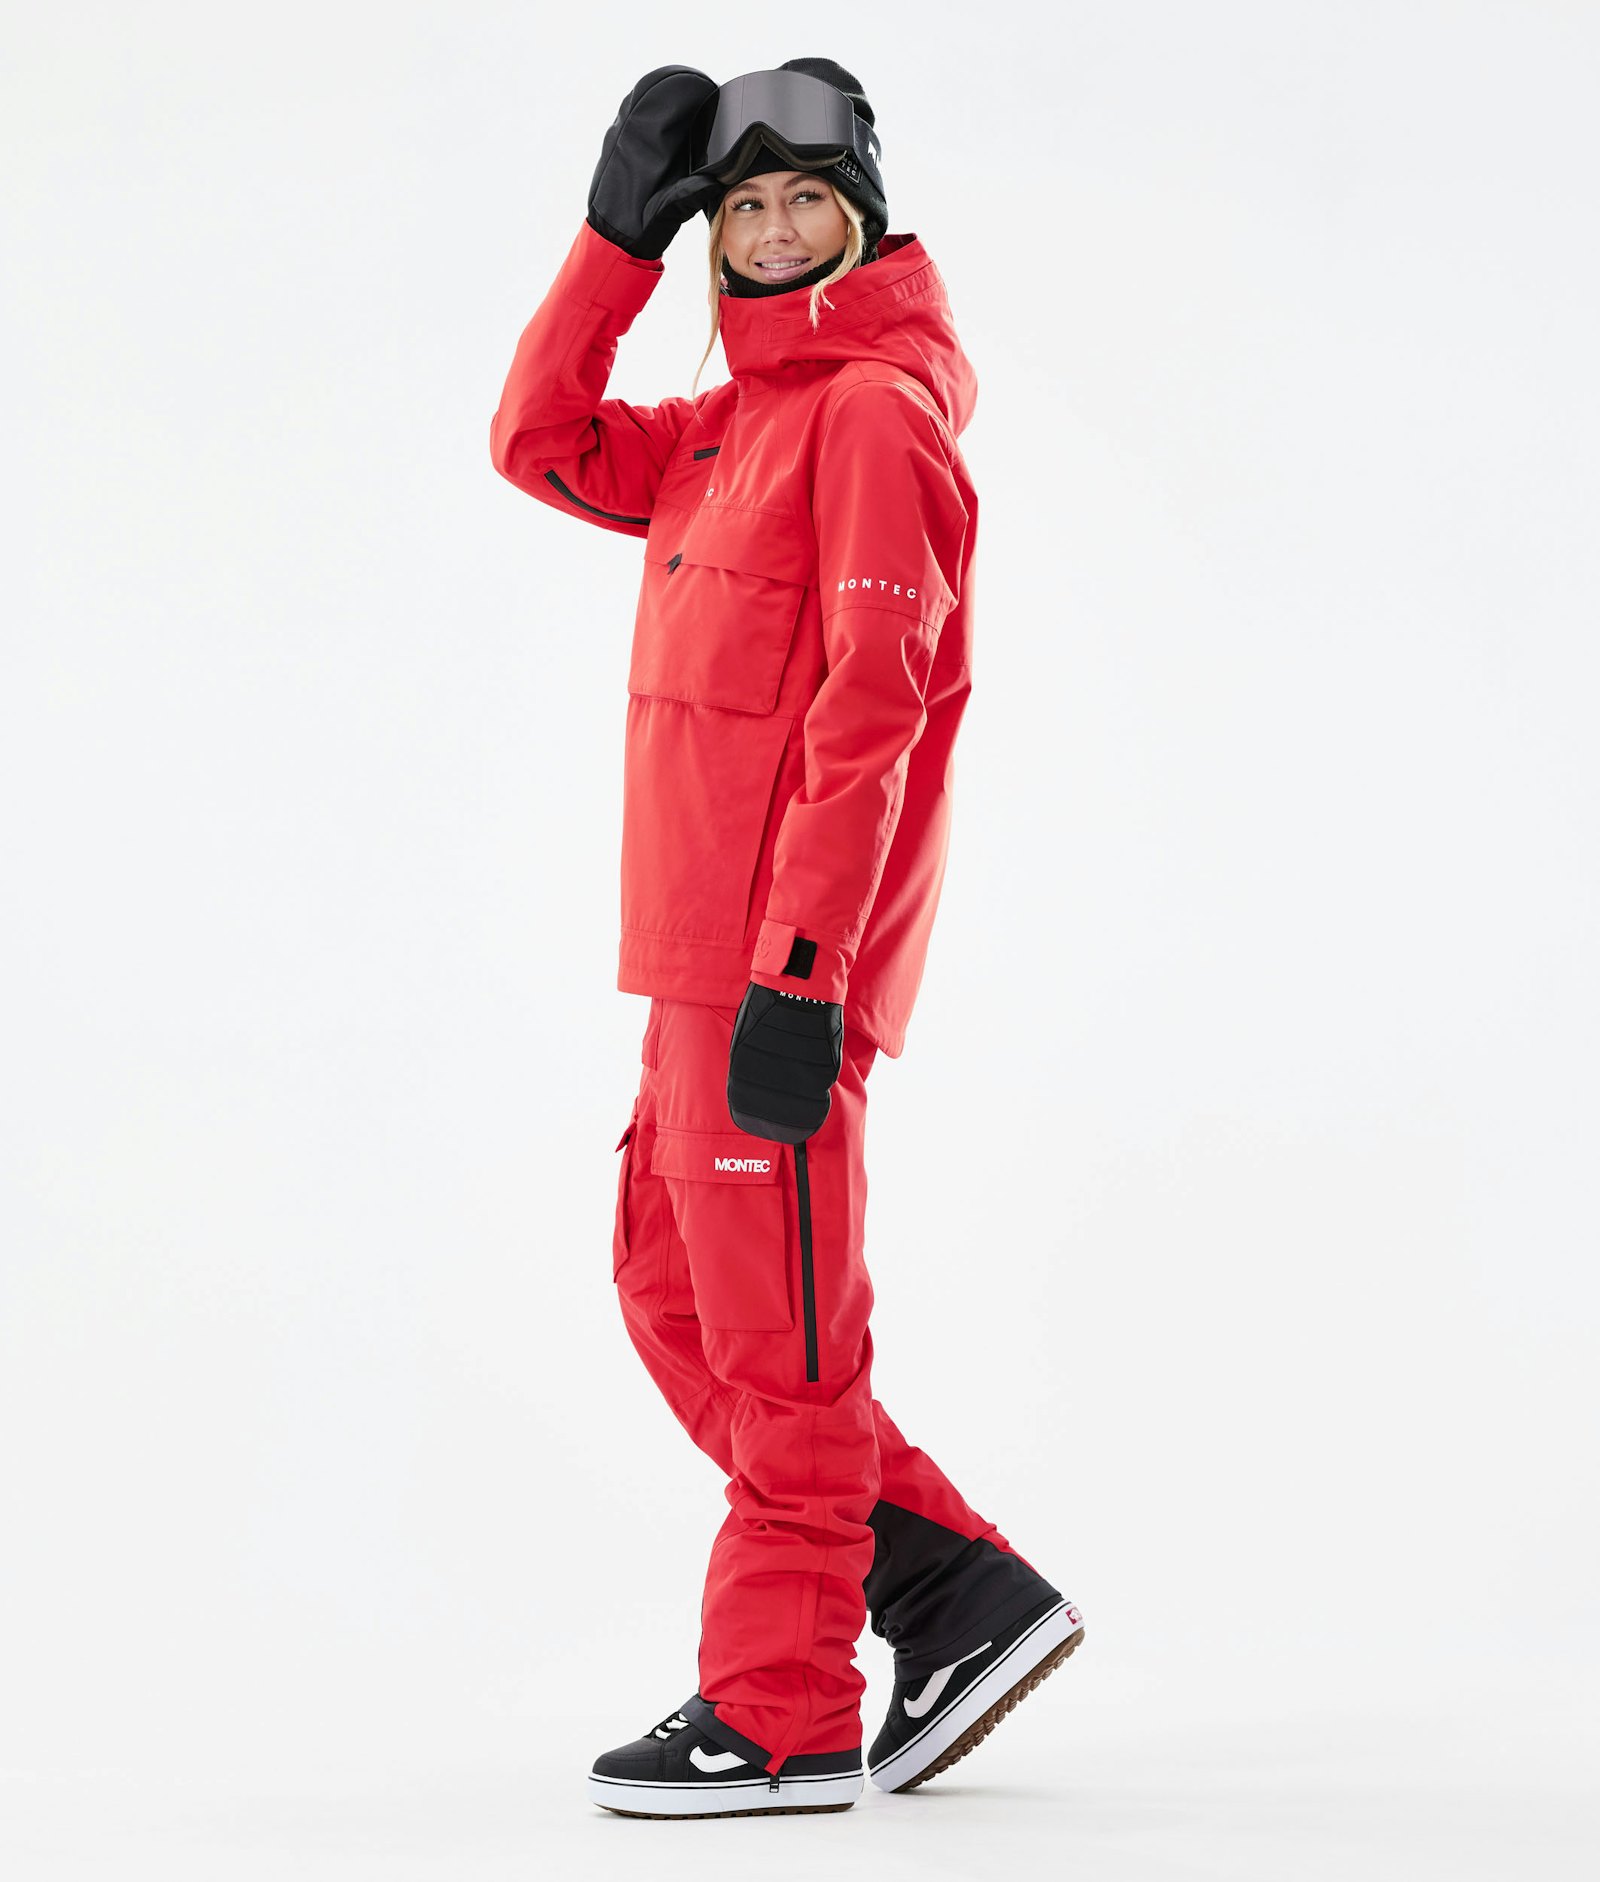 Dune W 2021 Snowboard Jacket Women Red Renewed, Image 6 of 11